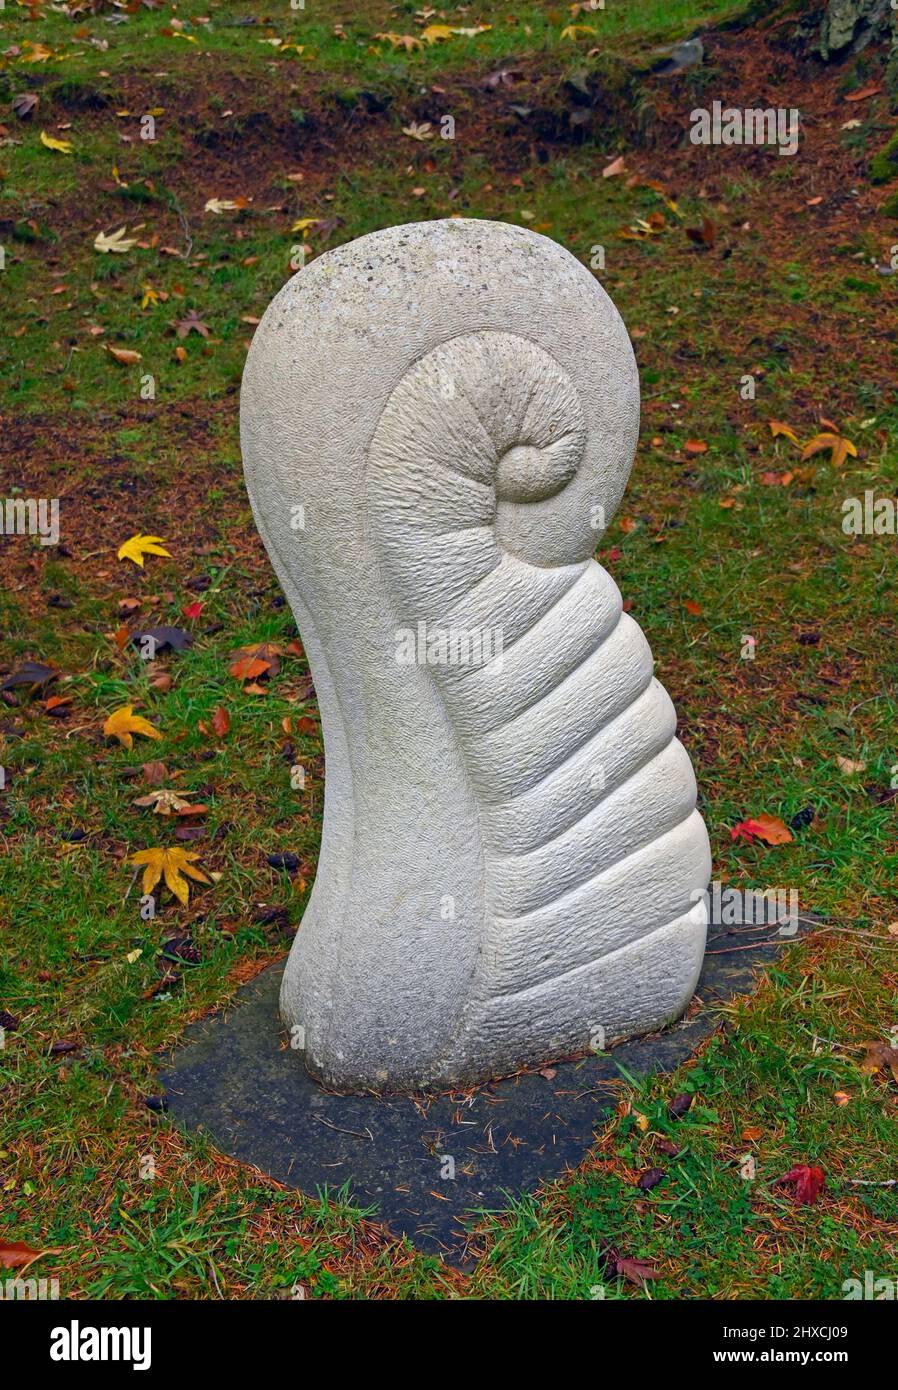 'New Life' sculpture by Susheila Jamieson 2018.  Dawyck Botanic Garden, Stobo, Scottish Borders, Scotland, United Kingdom, Europe. Stock Photo